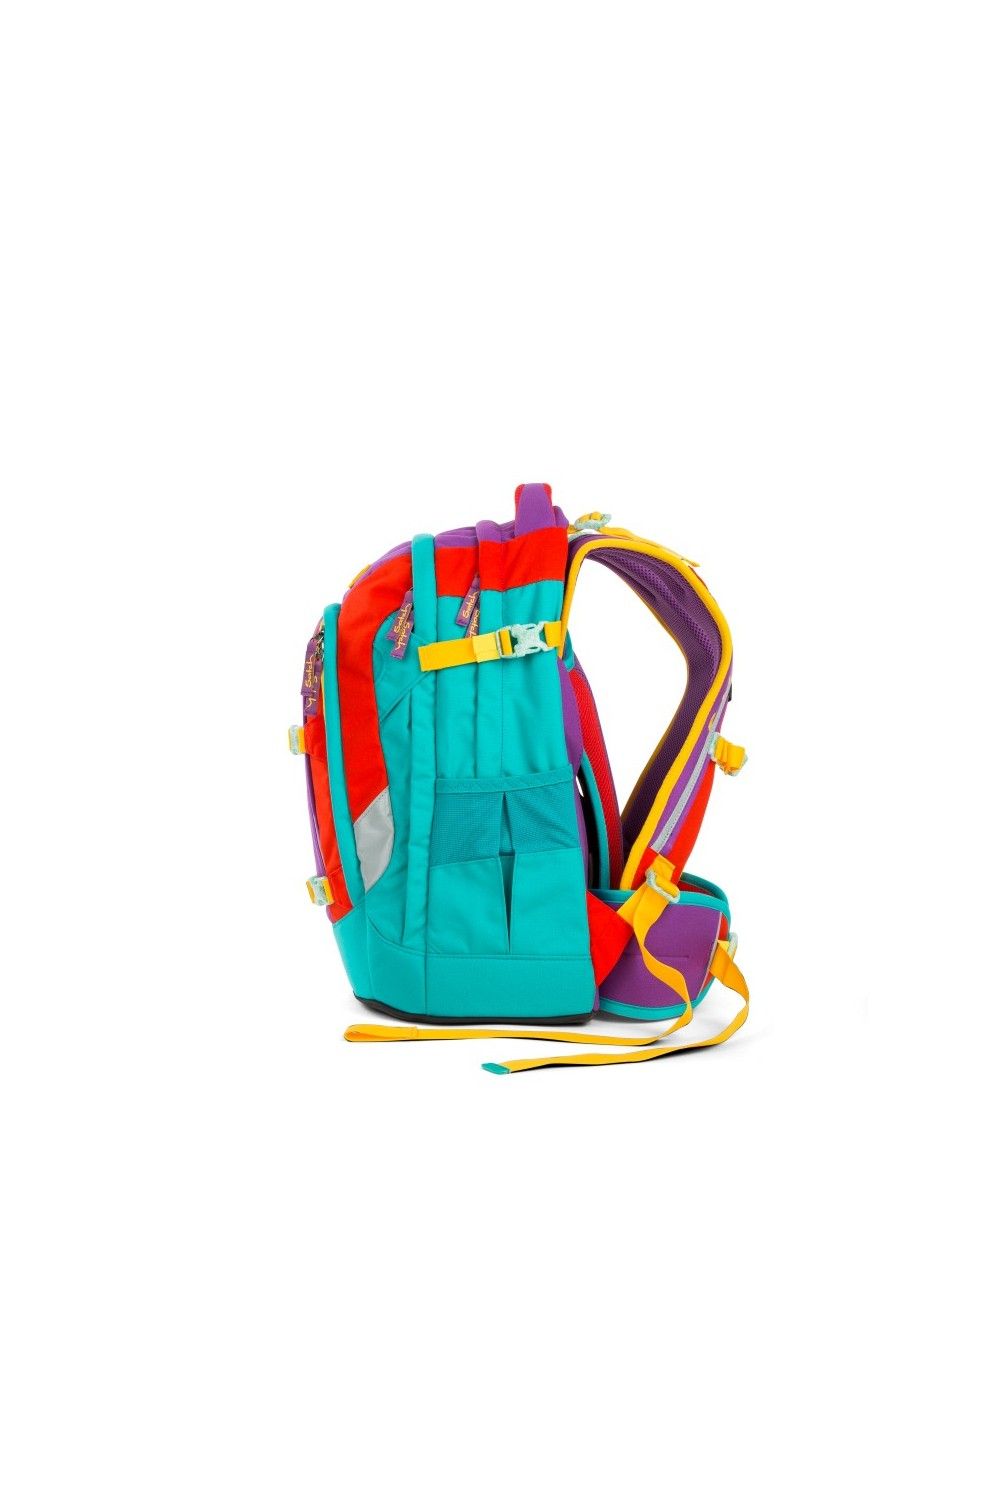 Satch school backpack Flash Runner